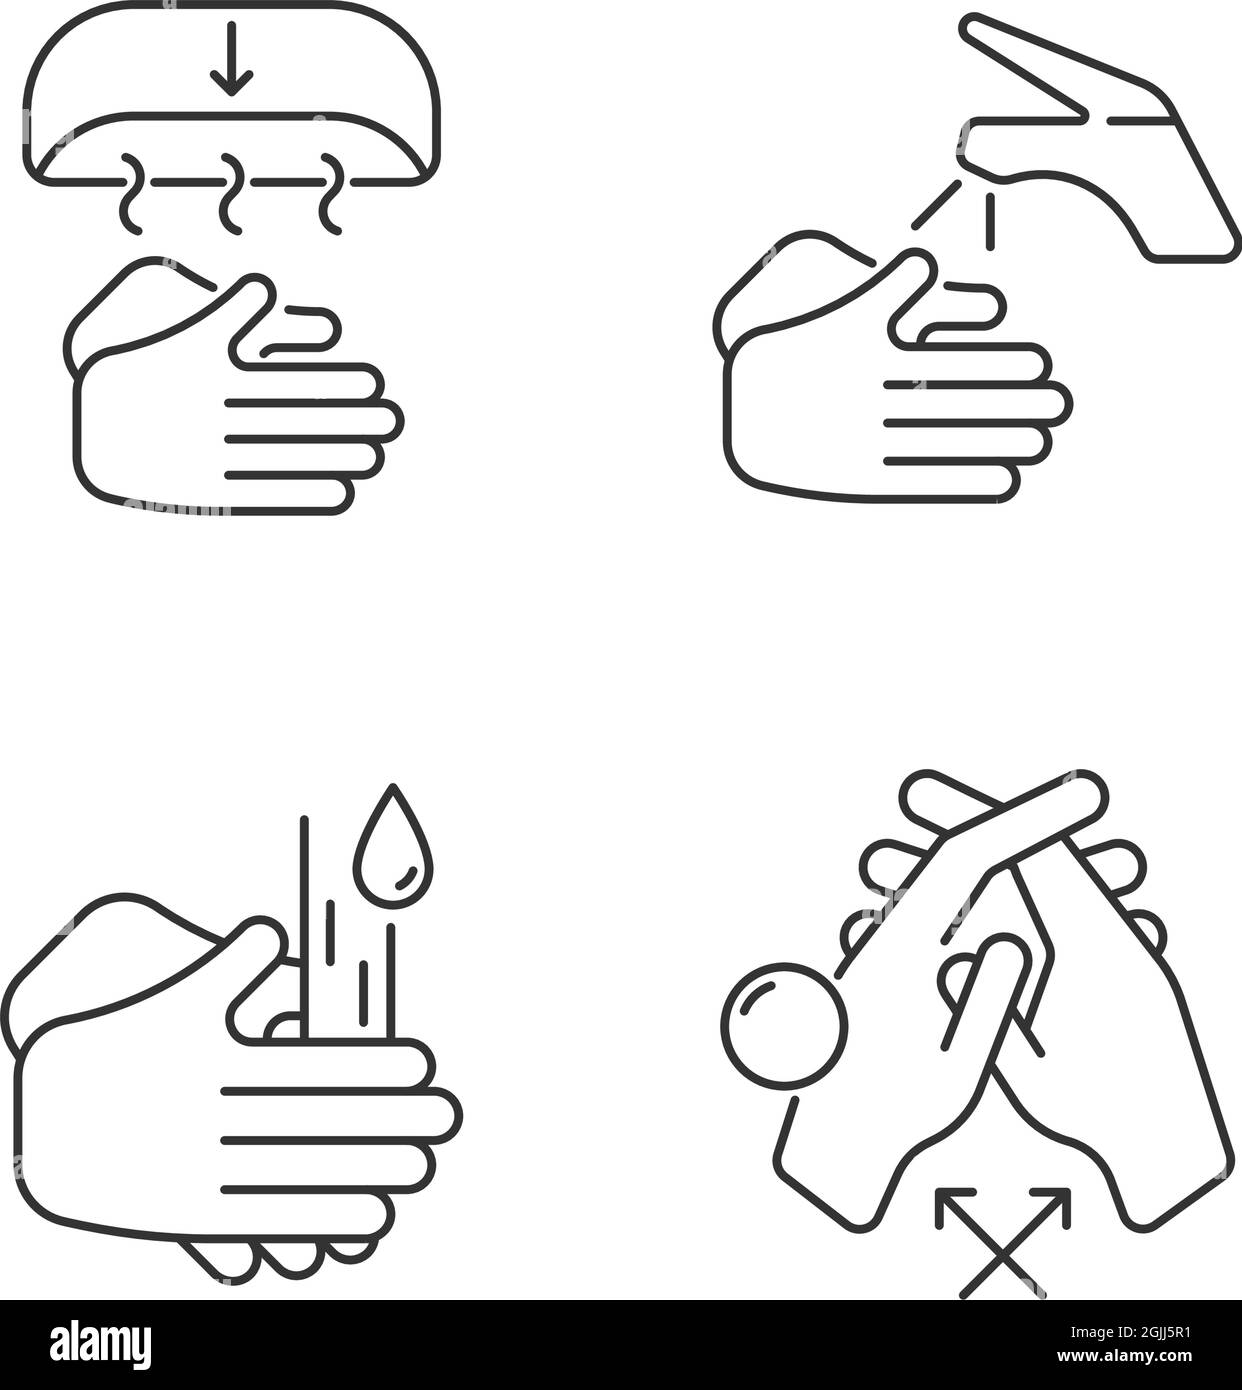 Proper handwashing linear icons set Stock Vector